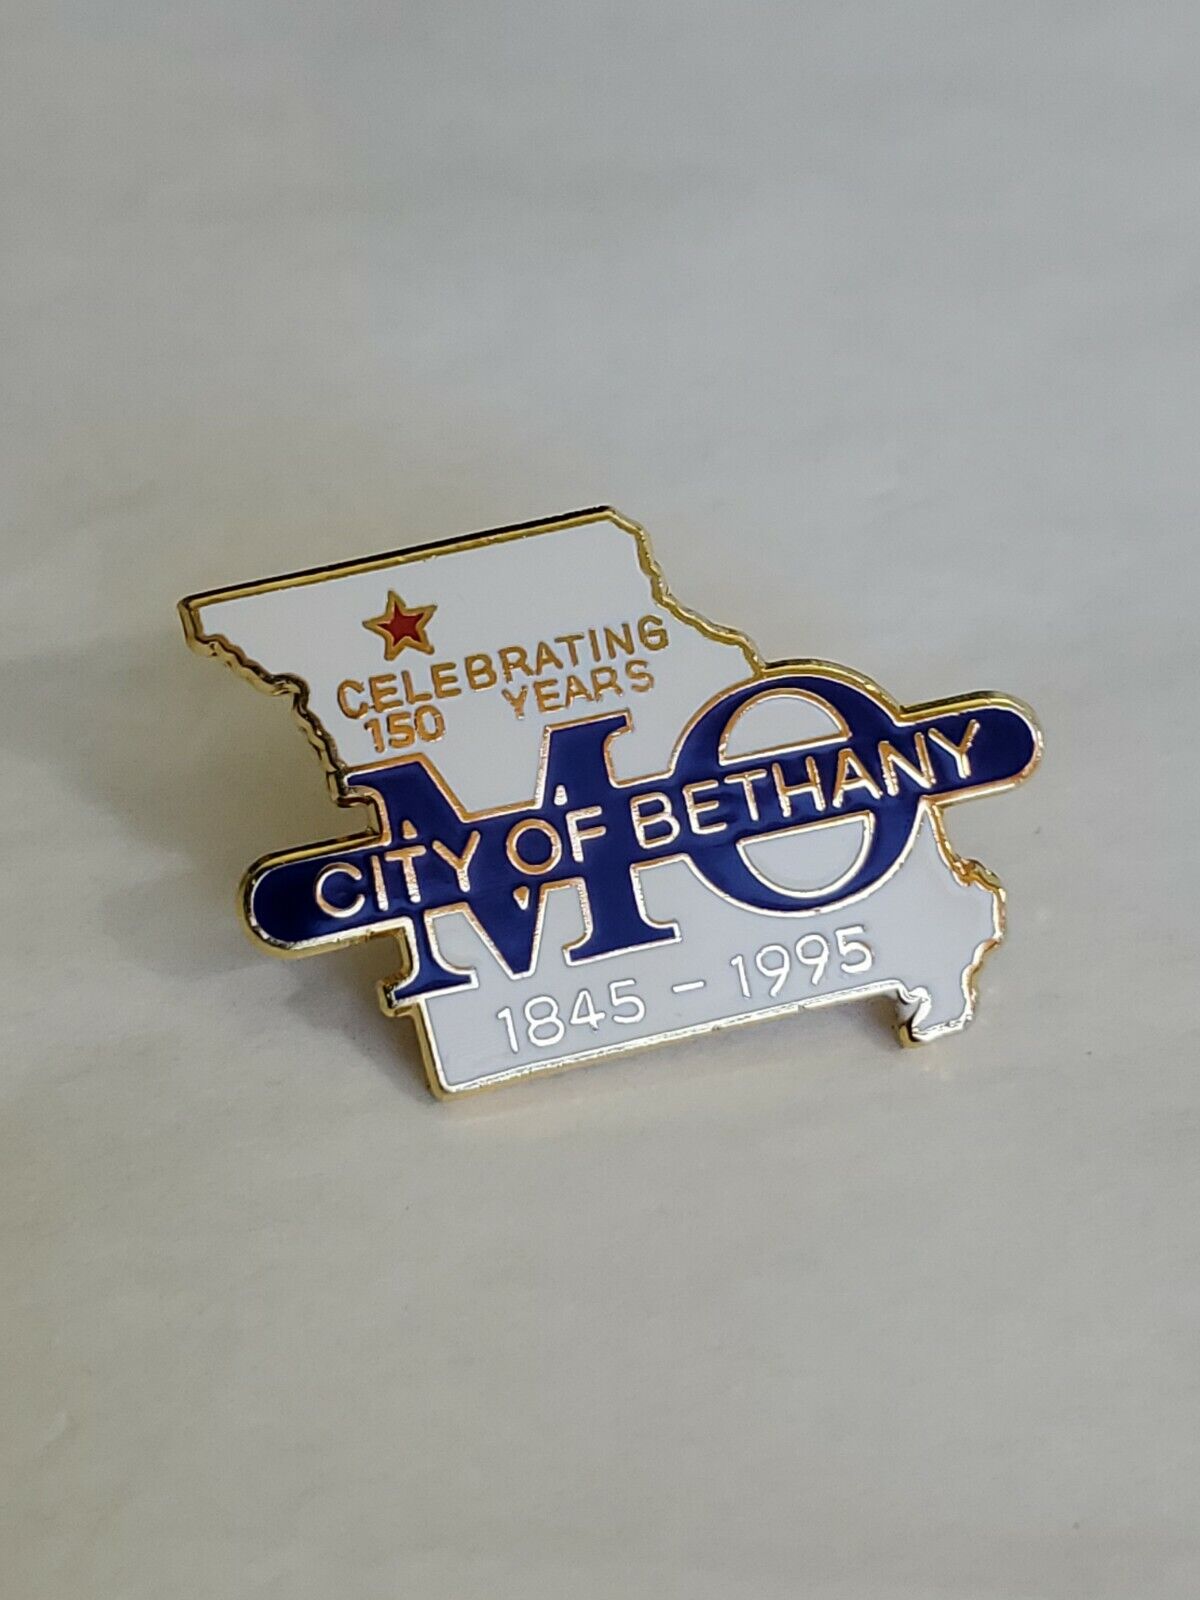 City Of Bethany MO Sesquicentennial Souvenir Pin 150 Years 1845 - 1995 Missouri